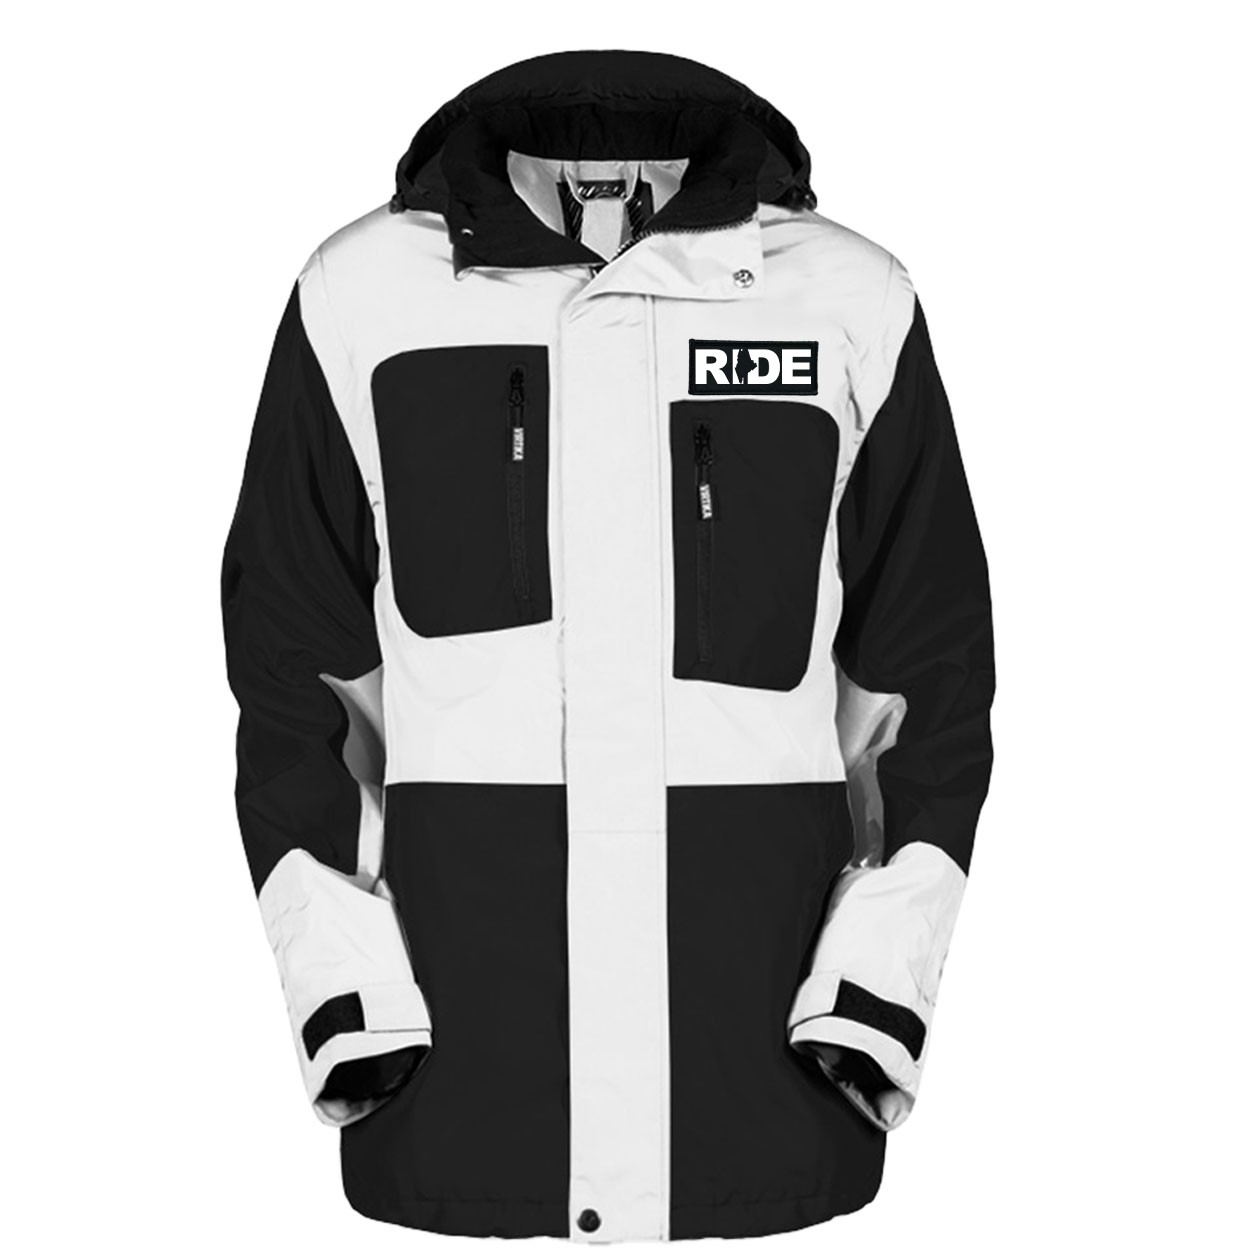 Ride Maine Pro Waterproof Breathable Winter Virtika Jacket Black/White (White Logo)